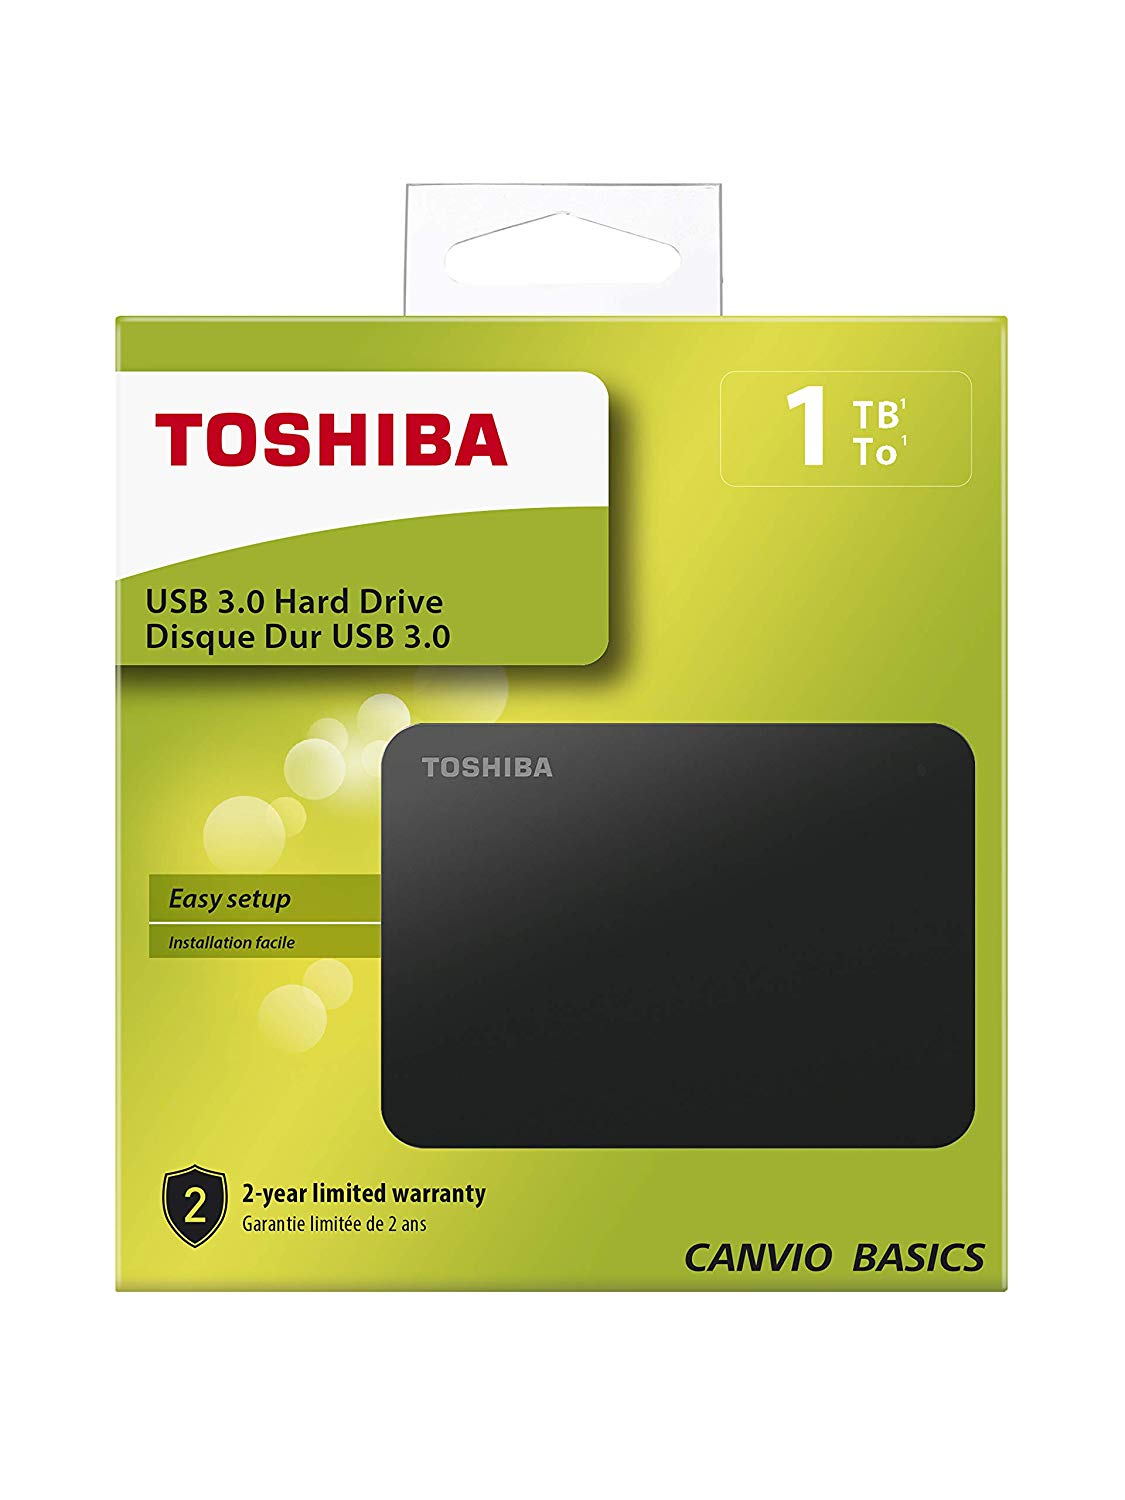 TOSHIBA - Disque Dur Externe - Canvio basics - 1 To - USB 3.0 - La Poste